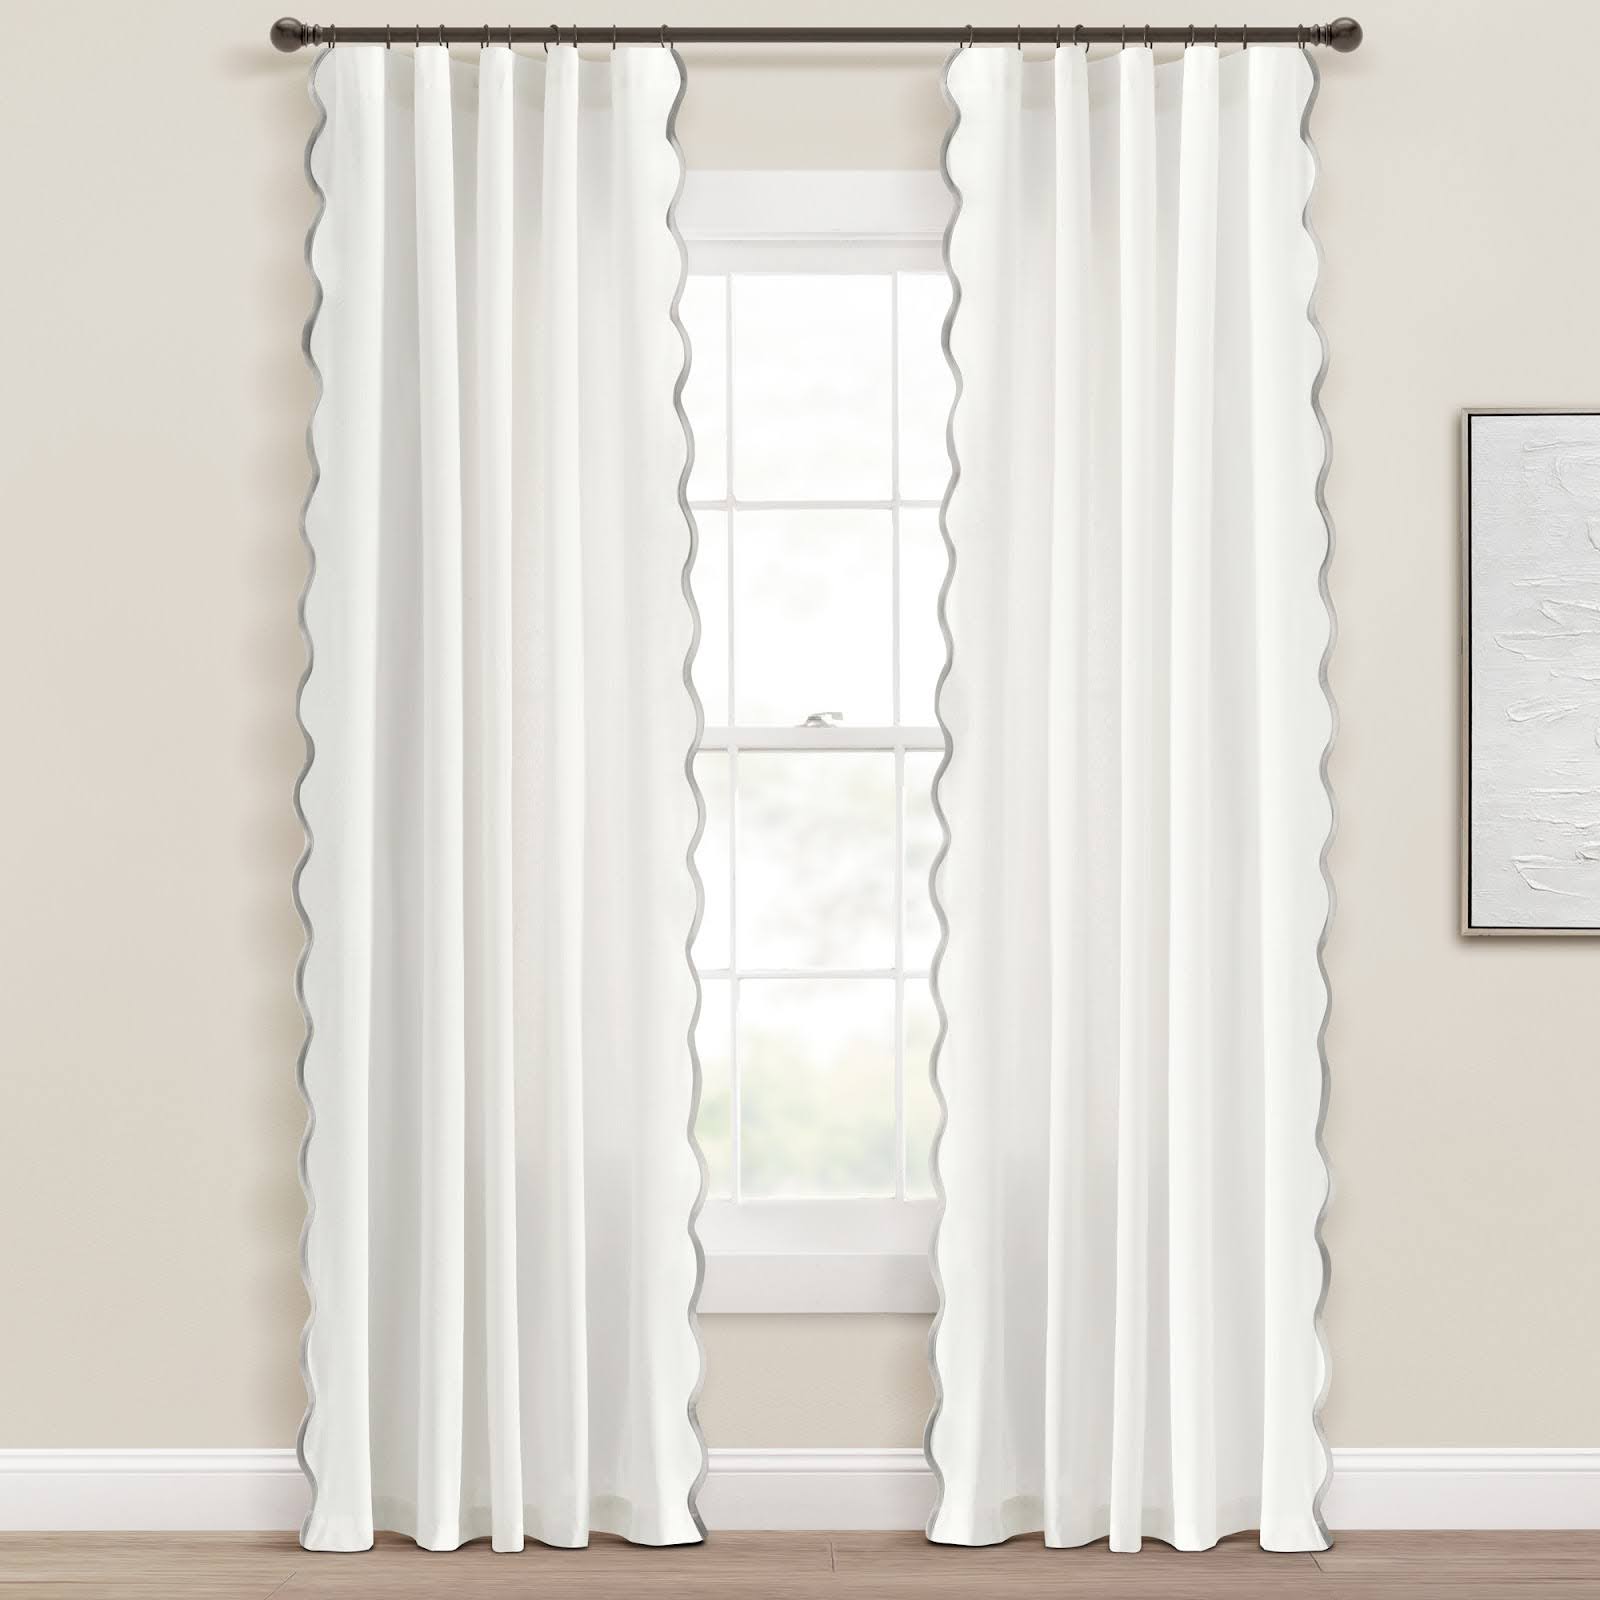 Understanding Curtain Dimensions